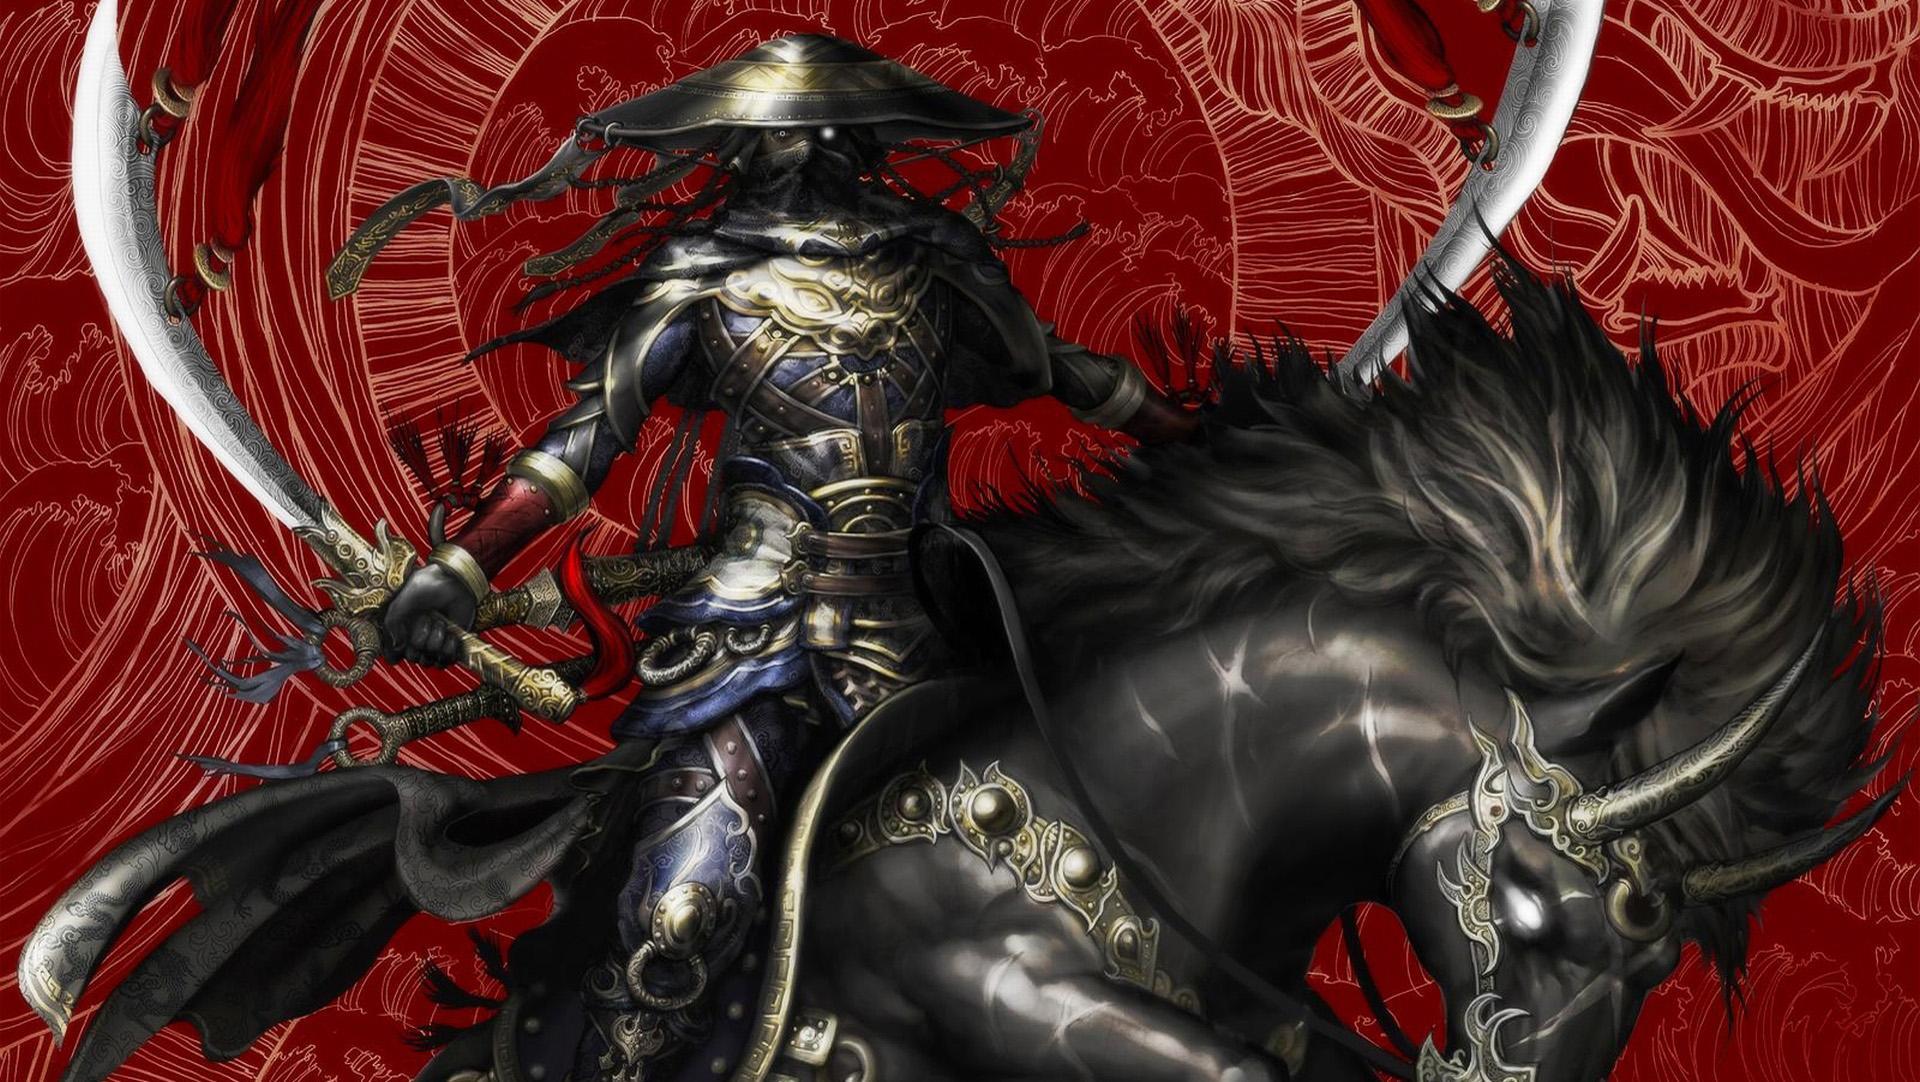 Fantasy Samurai - HD Wallpaper for Android - APK Download